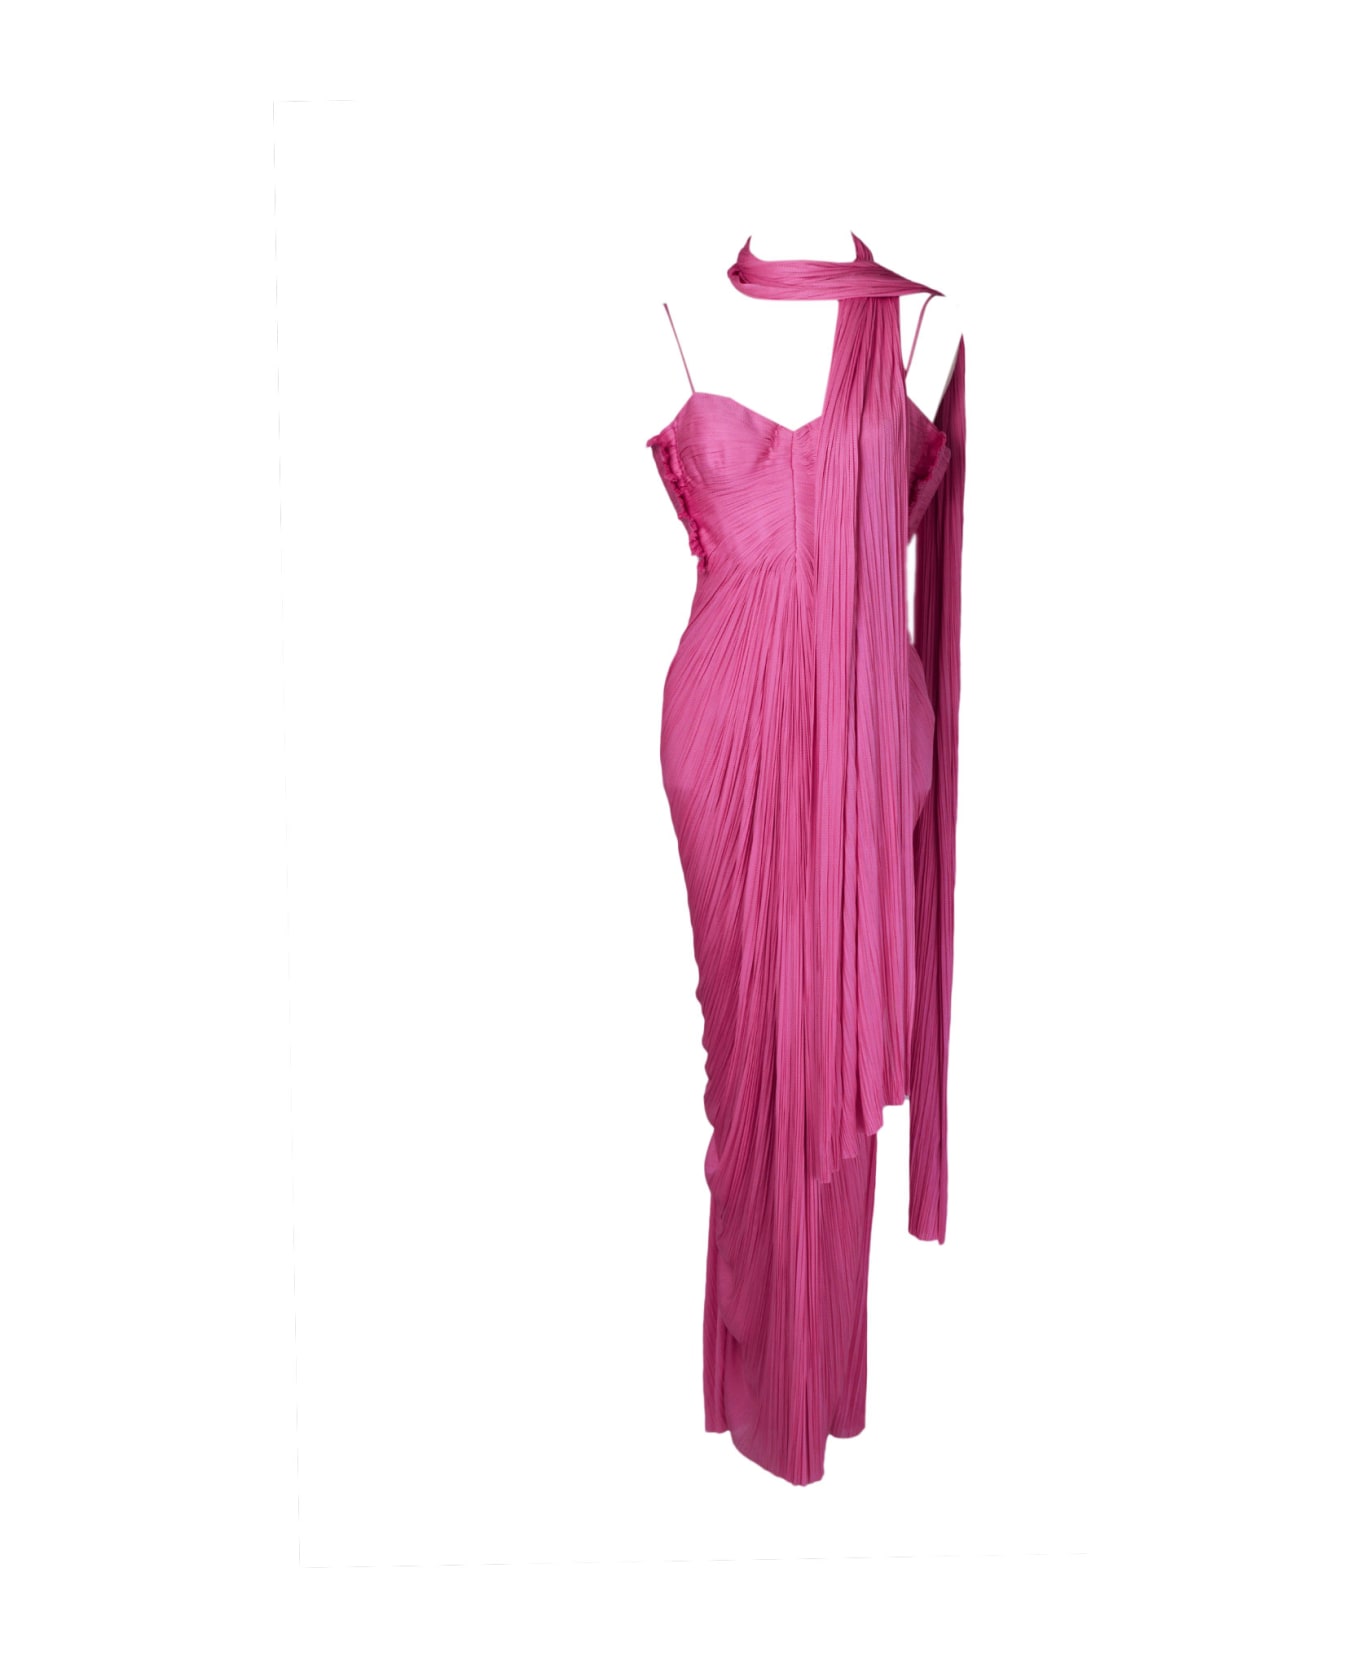 Maria Lucia Hohan Kallie Plisse' Gown - Pink